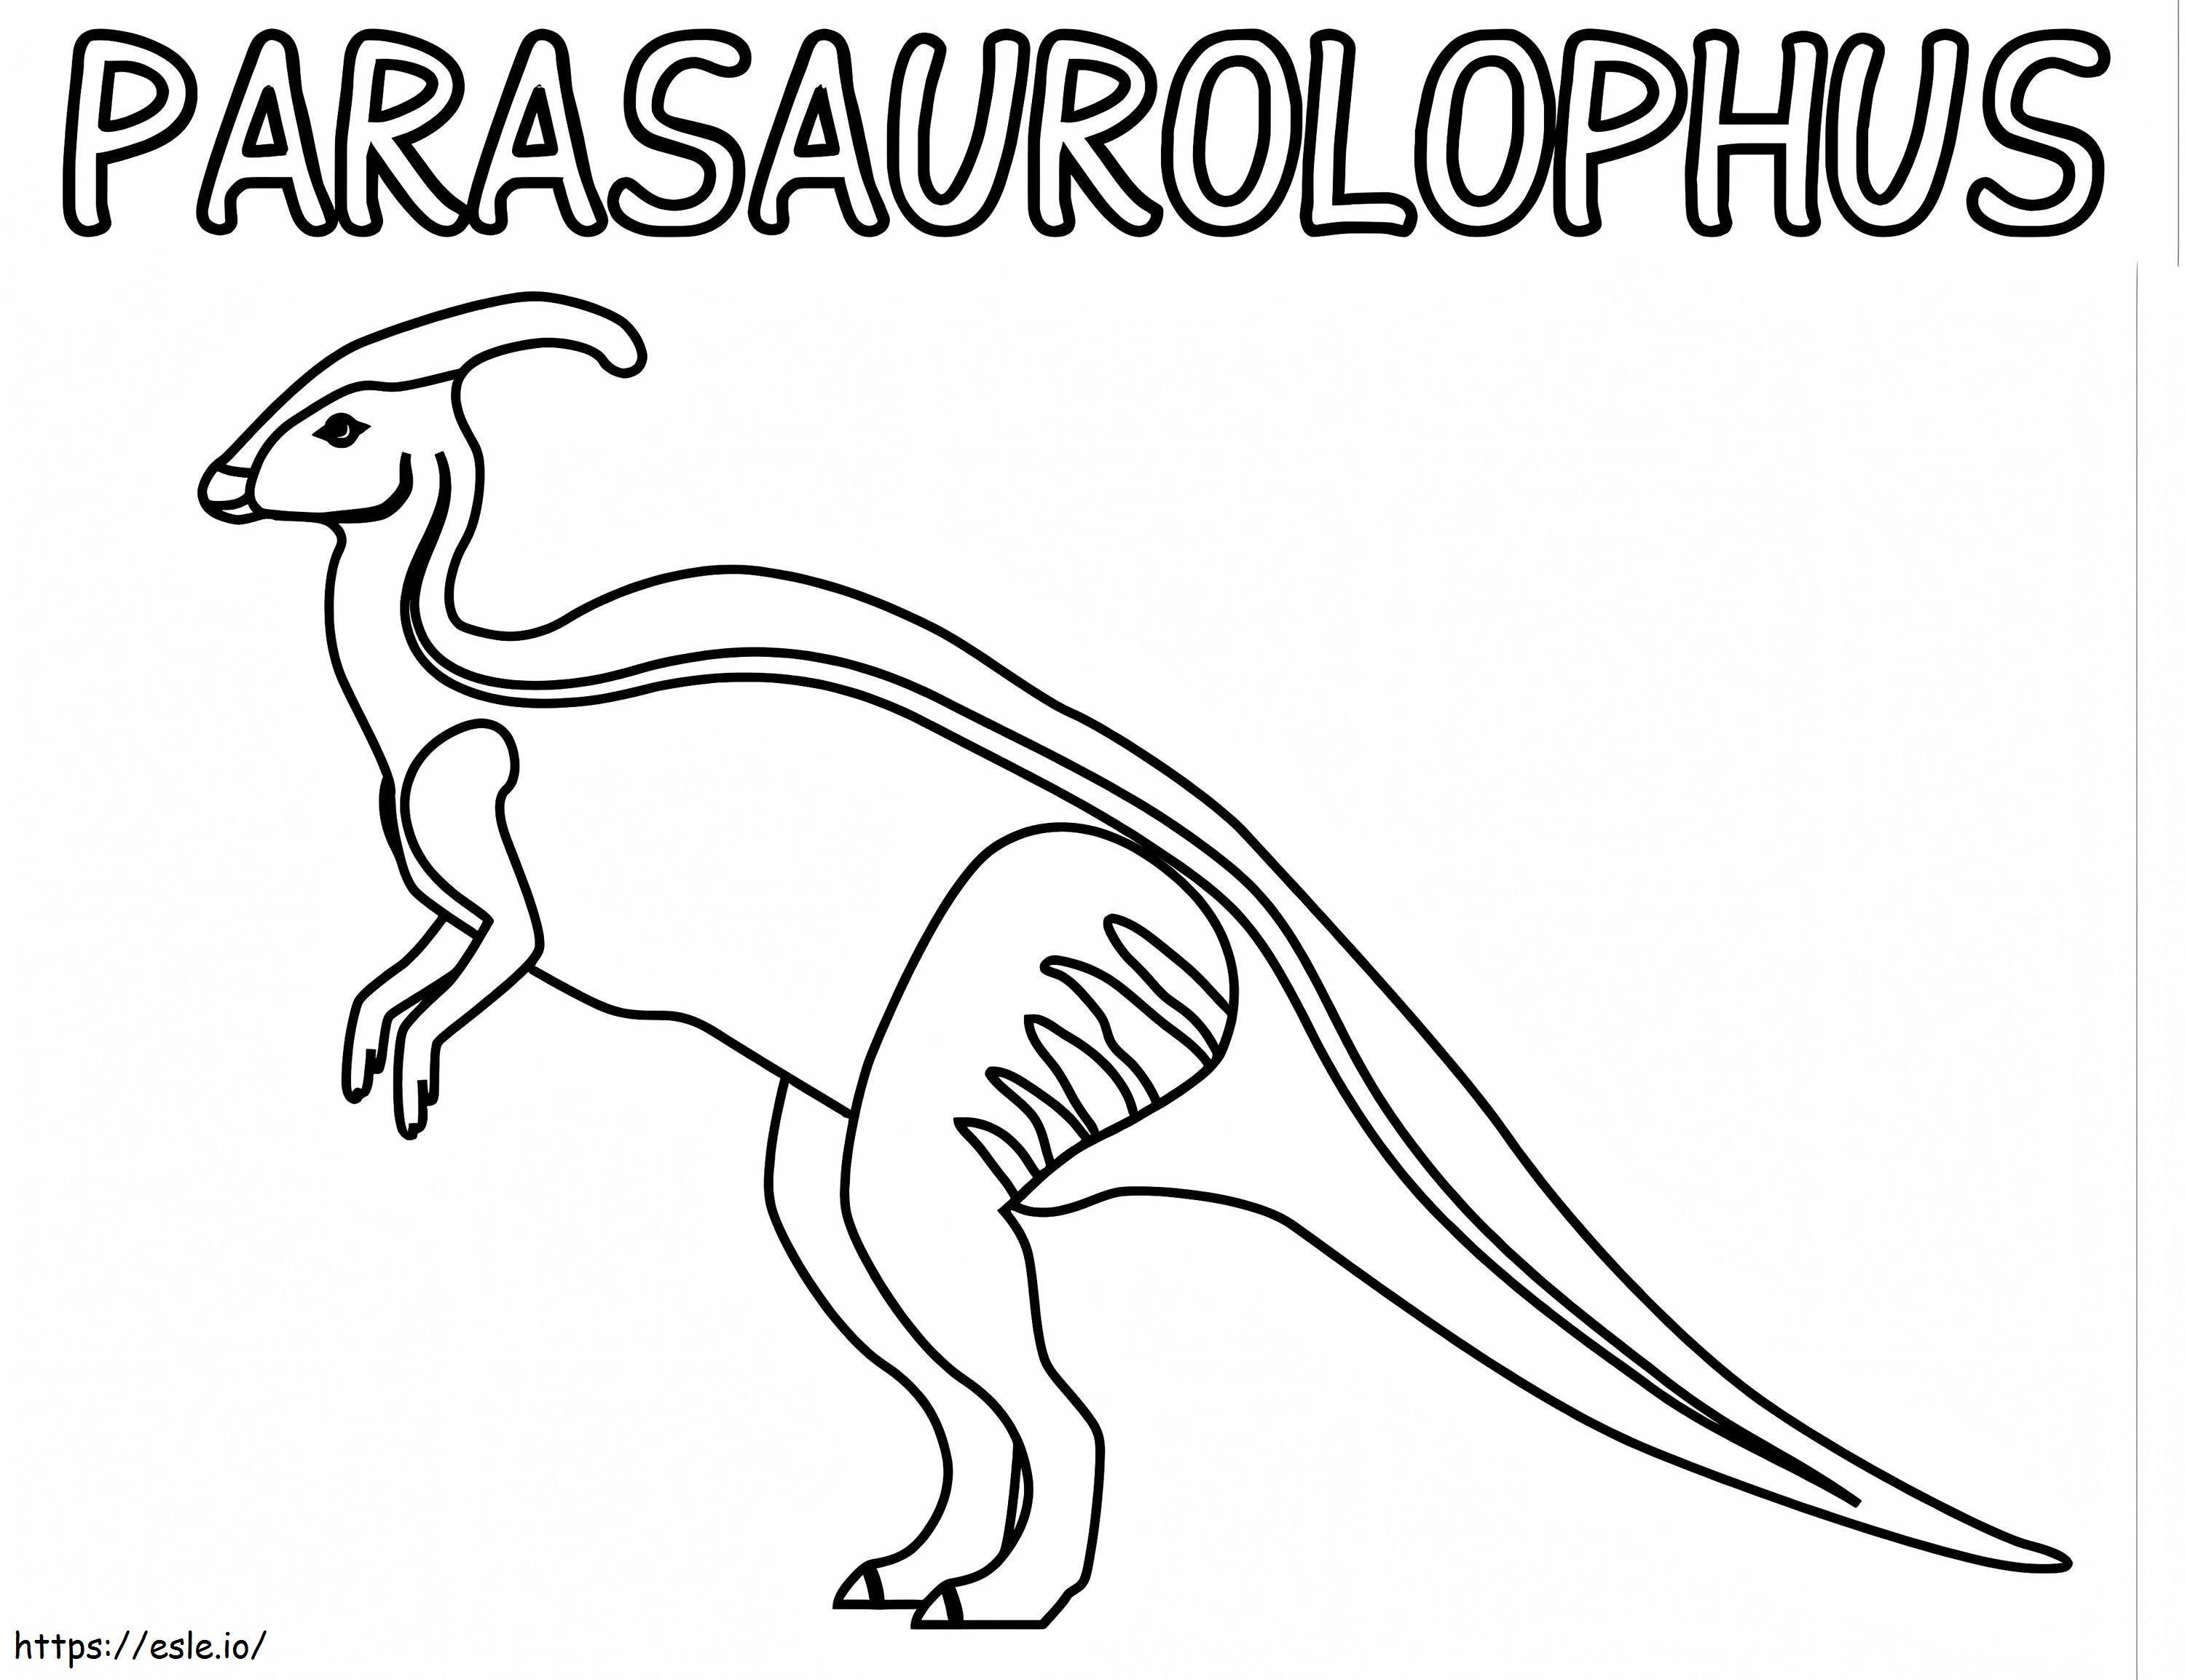 Parasaurolophus 10 coloring page